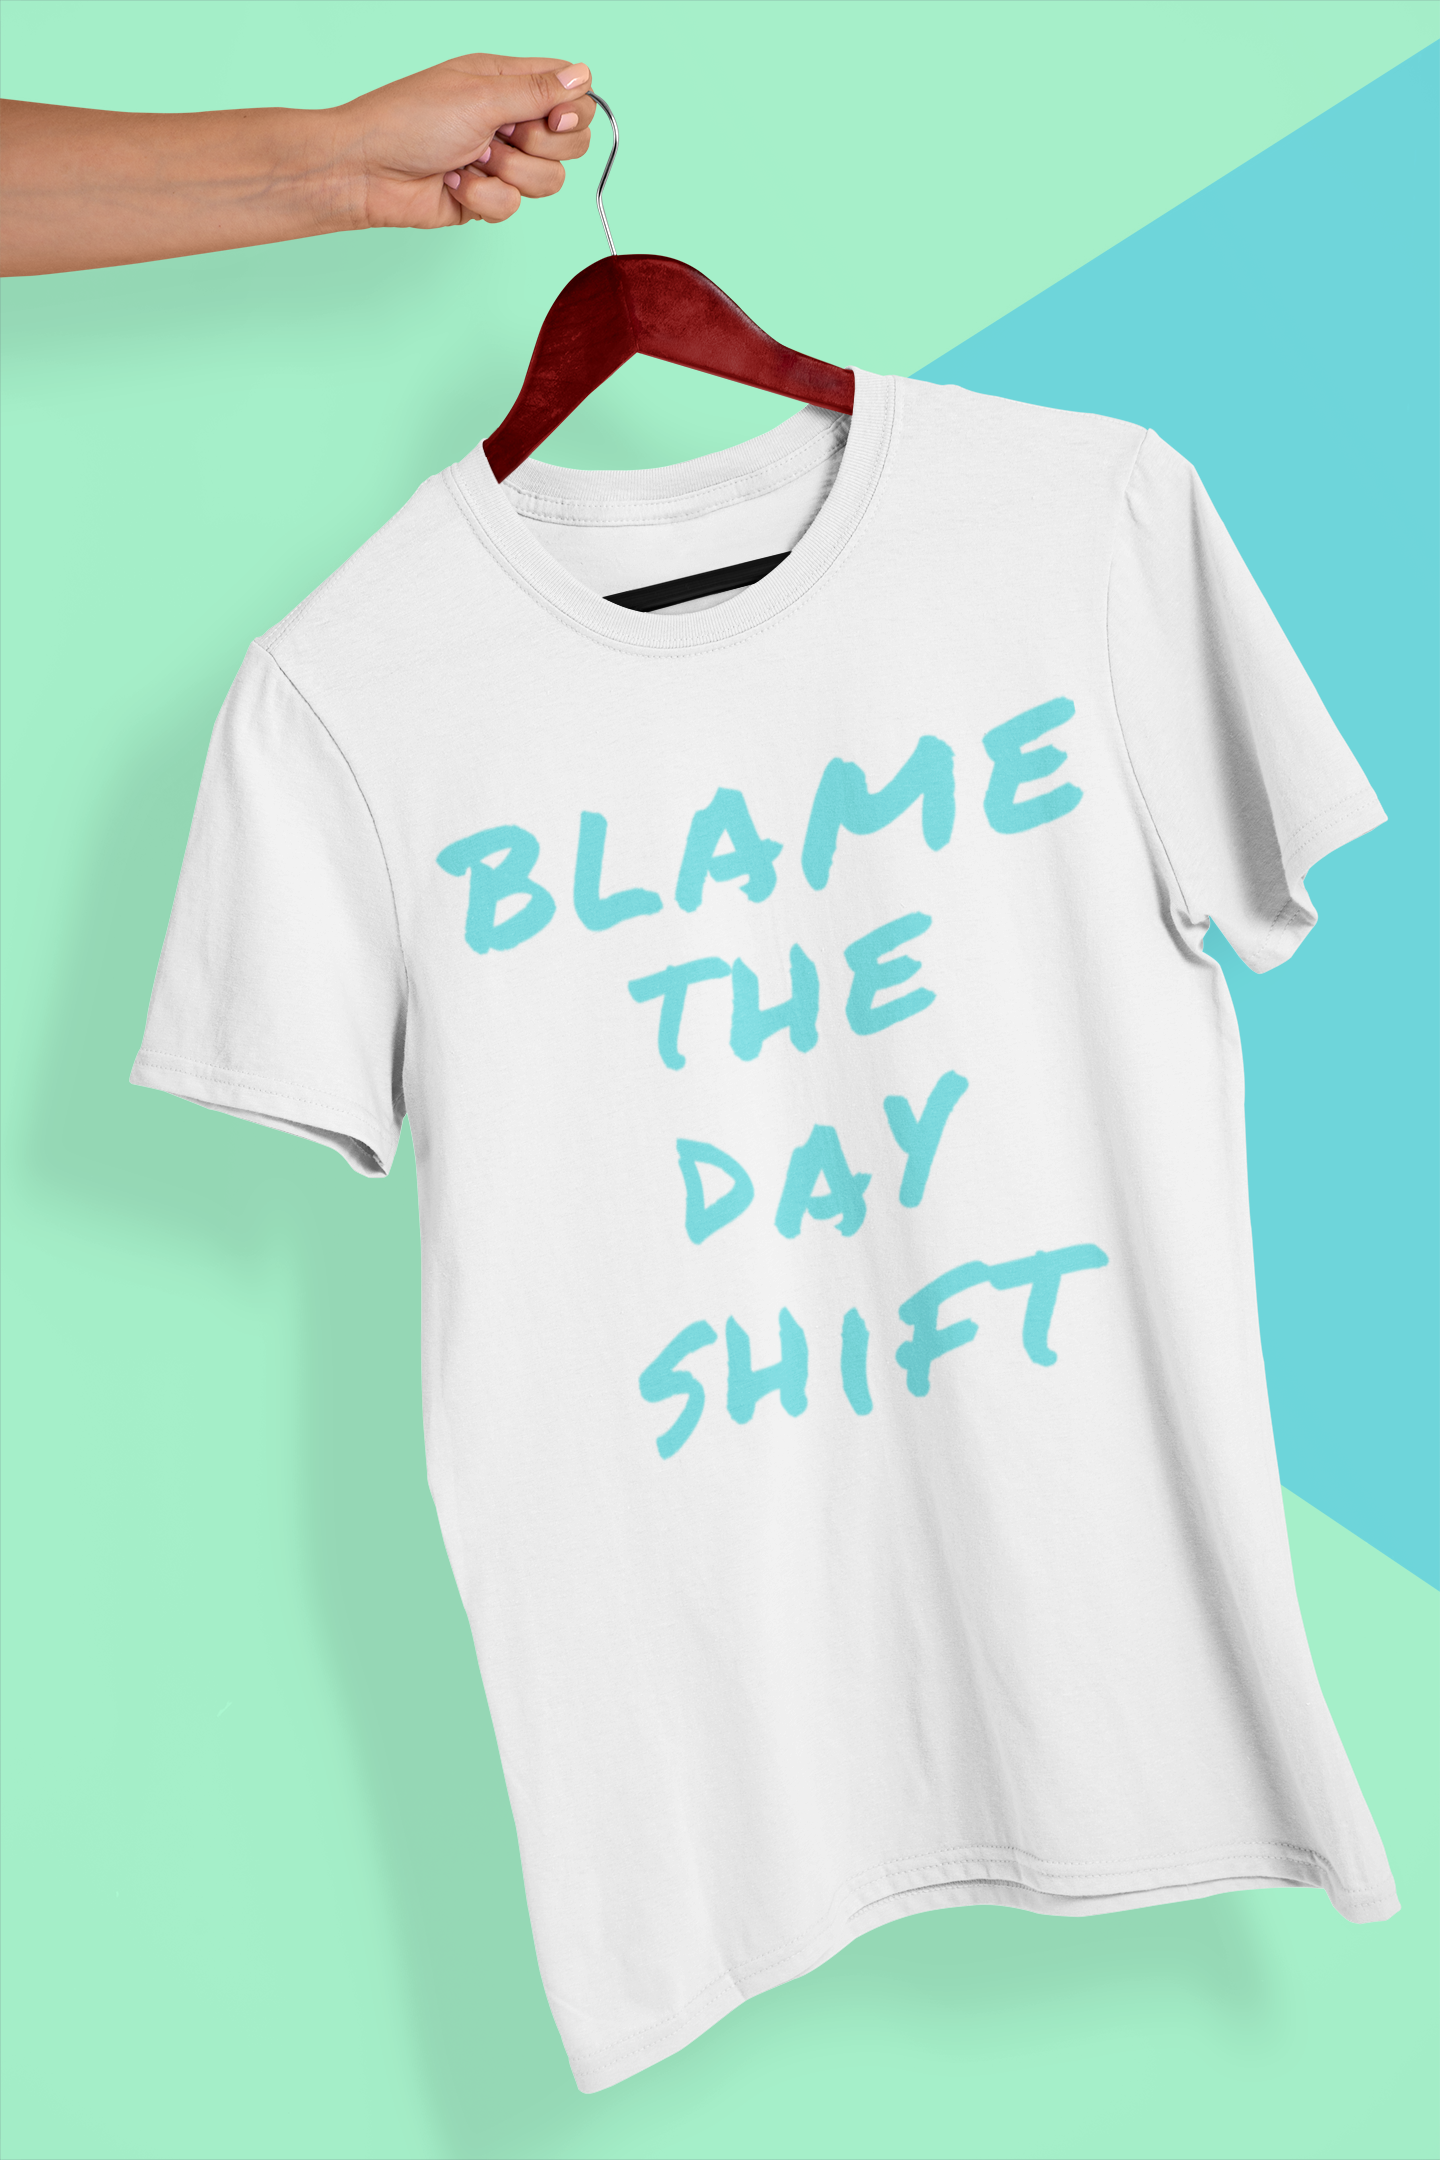 Blame the Day Shift - Funny Nursing Shirt - Friends Nurse Shirt - Nursing School T Shirt - Nurse Night Shift Worker -  Hospital Staff - Gift